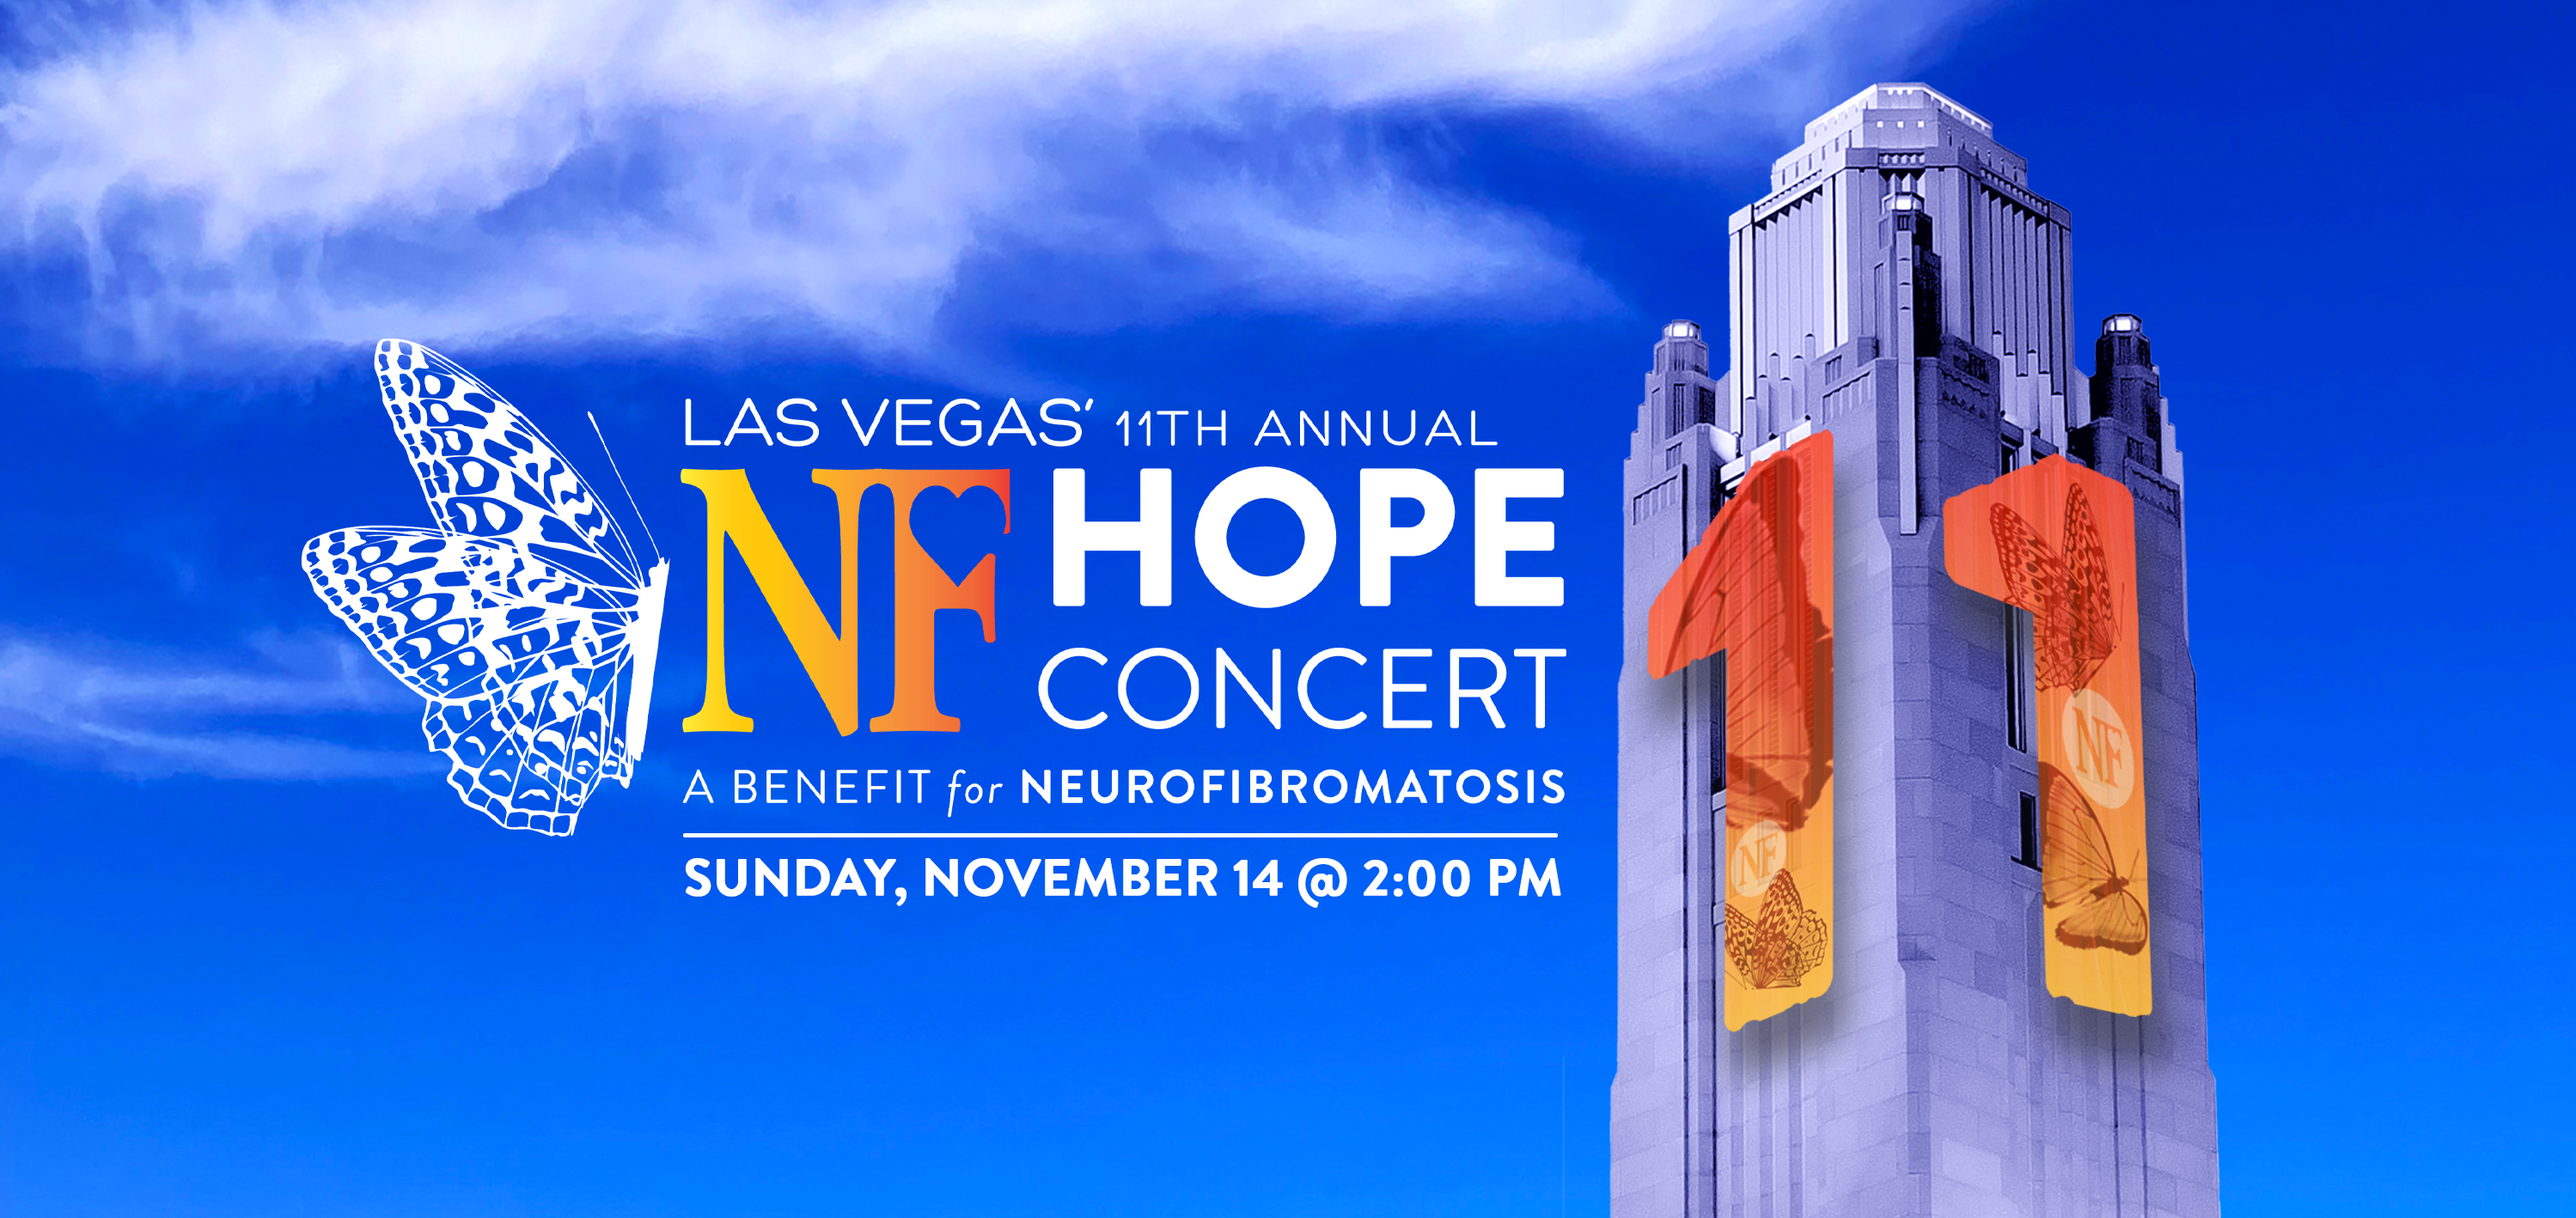 Las Vegas' NF Hope Concert - Neurofibromatosis Network